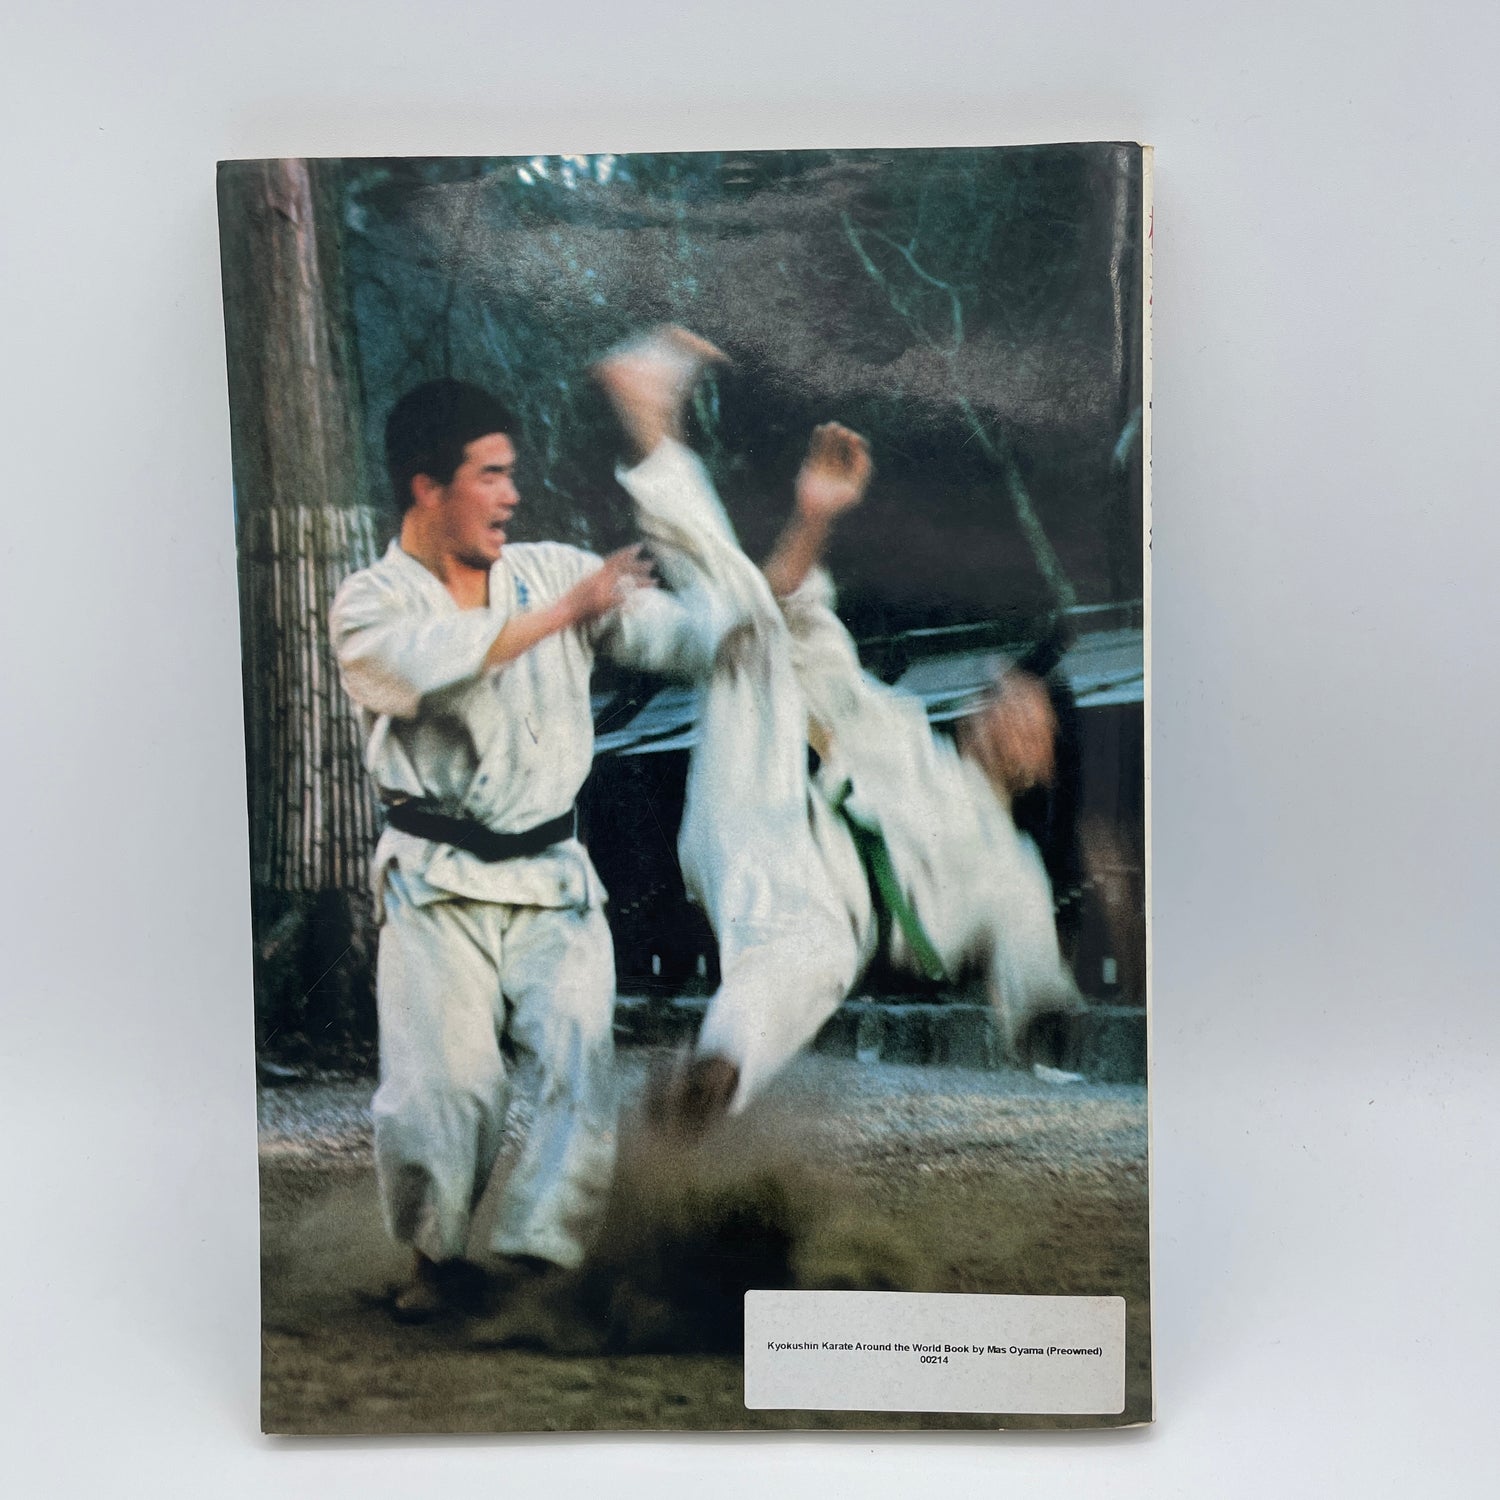 Kyokushin Karate Around the World Book by Mas Oyama (Preowned)